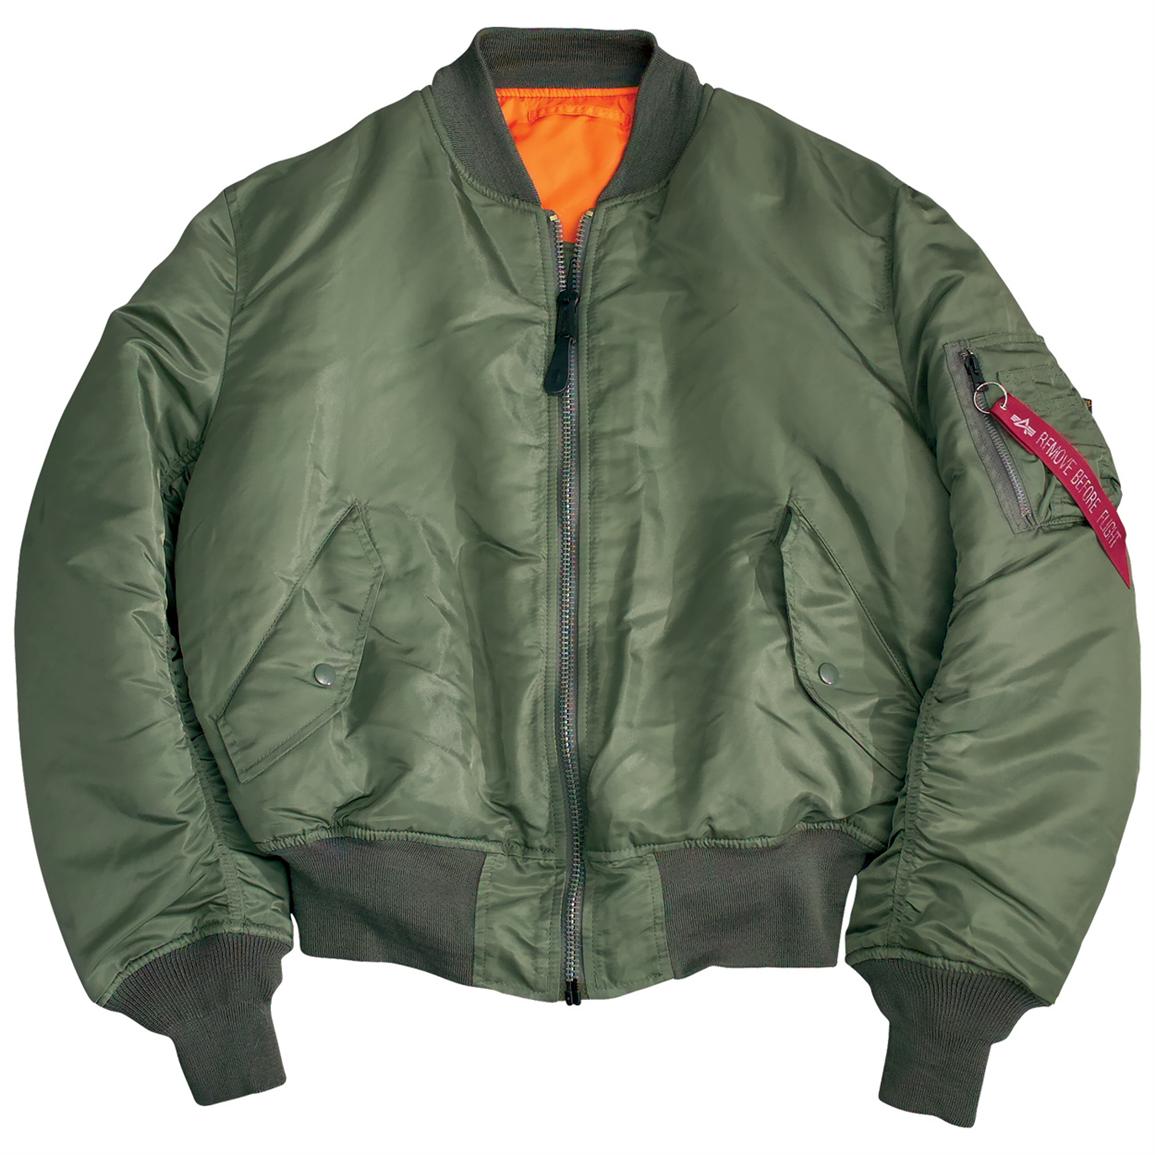 Alpha® MA - 1™ Nylon Flight Jacket - 129696, Tactical Clothing at